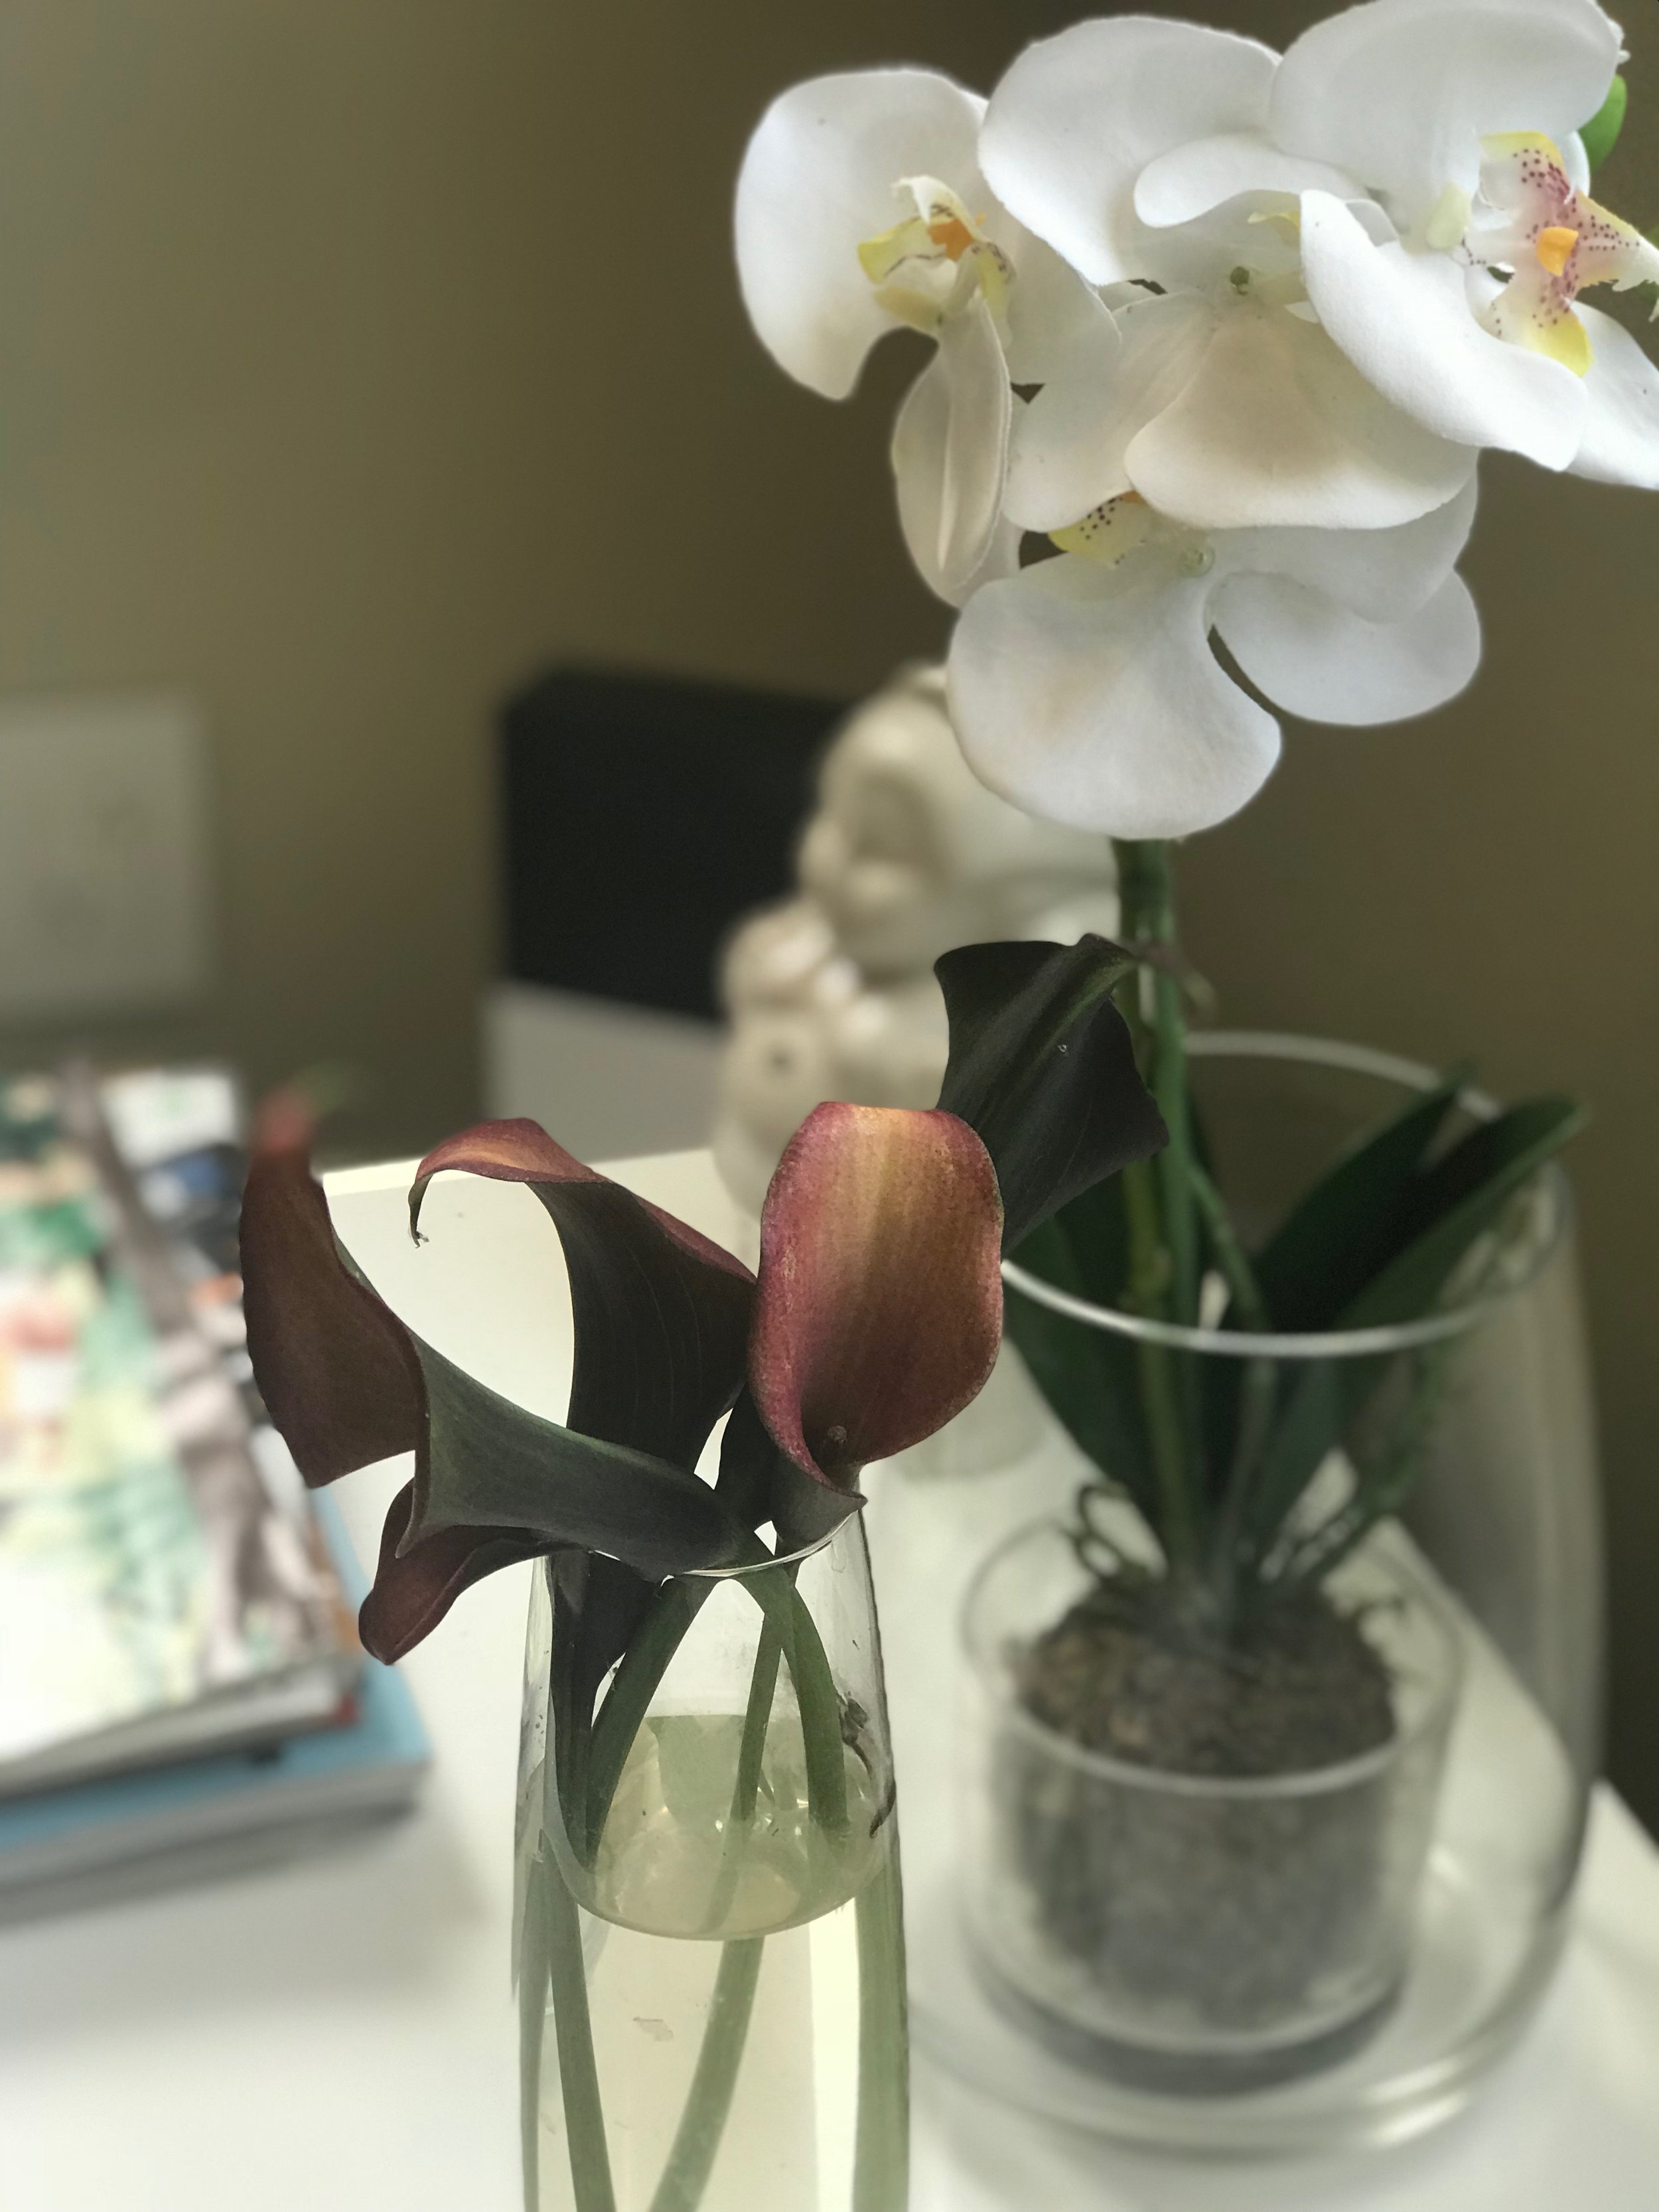 VORCOOL Artificial Orchid Phalaenopsis Arrangement Flower Bonsai with Vase Potted Phalaenopsis Artificial Potted Plant Bonsai Fake Bonsai for Room Table Centerpieces